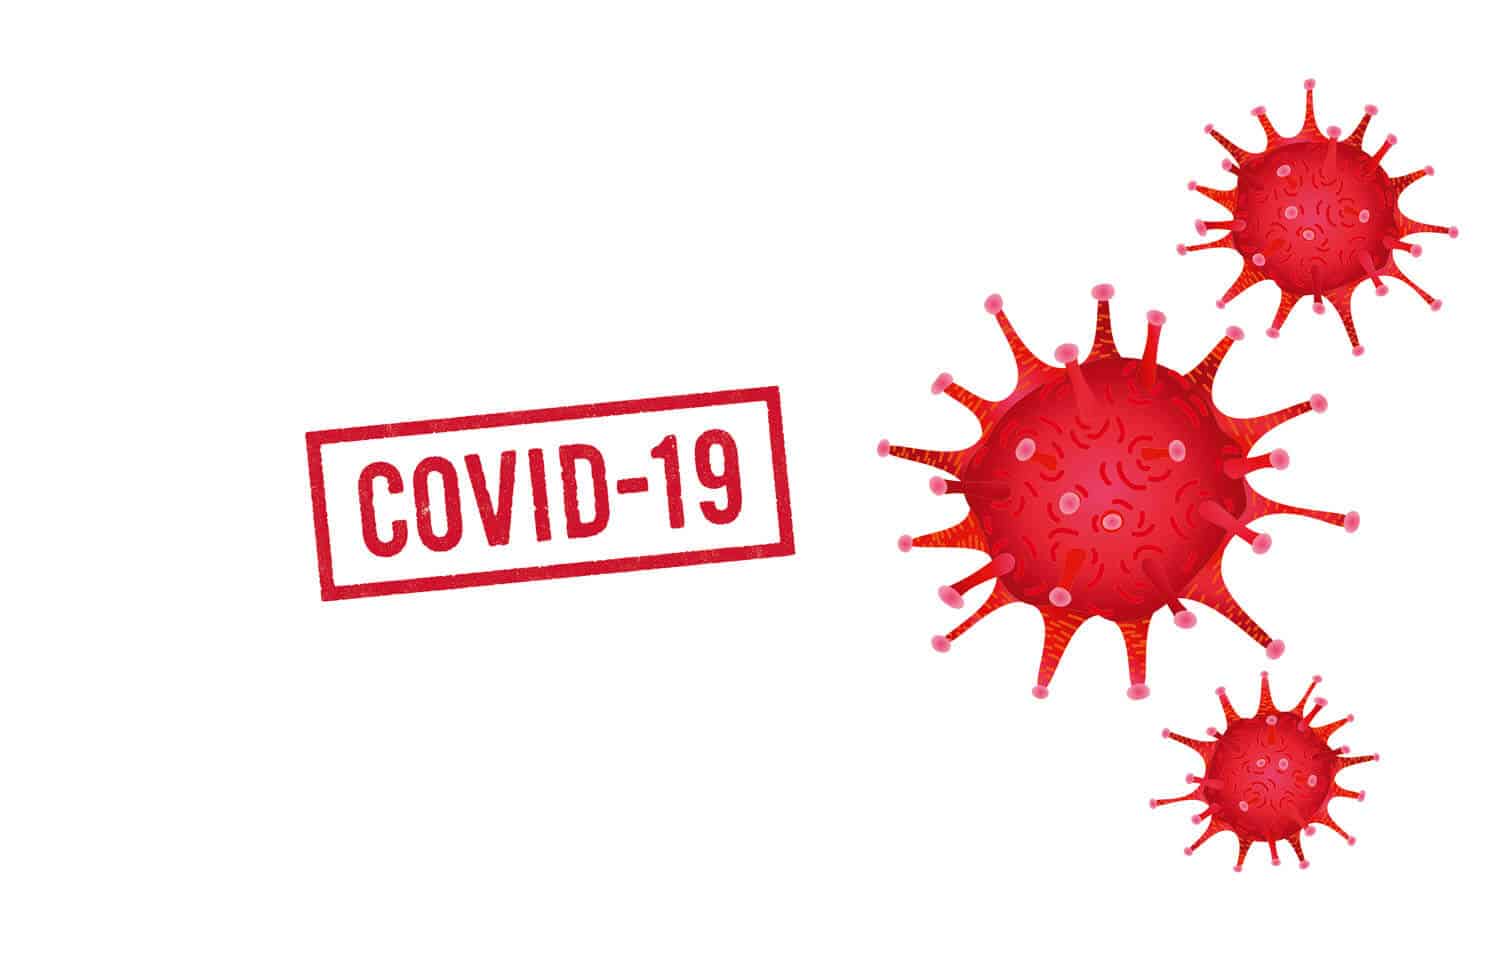 Covid 19, pandemic coronavirus symbol and icon vector illustration background